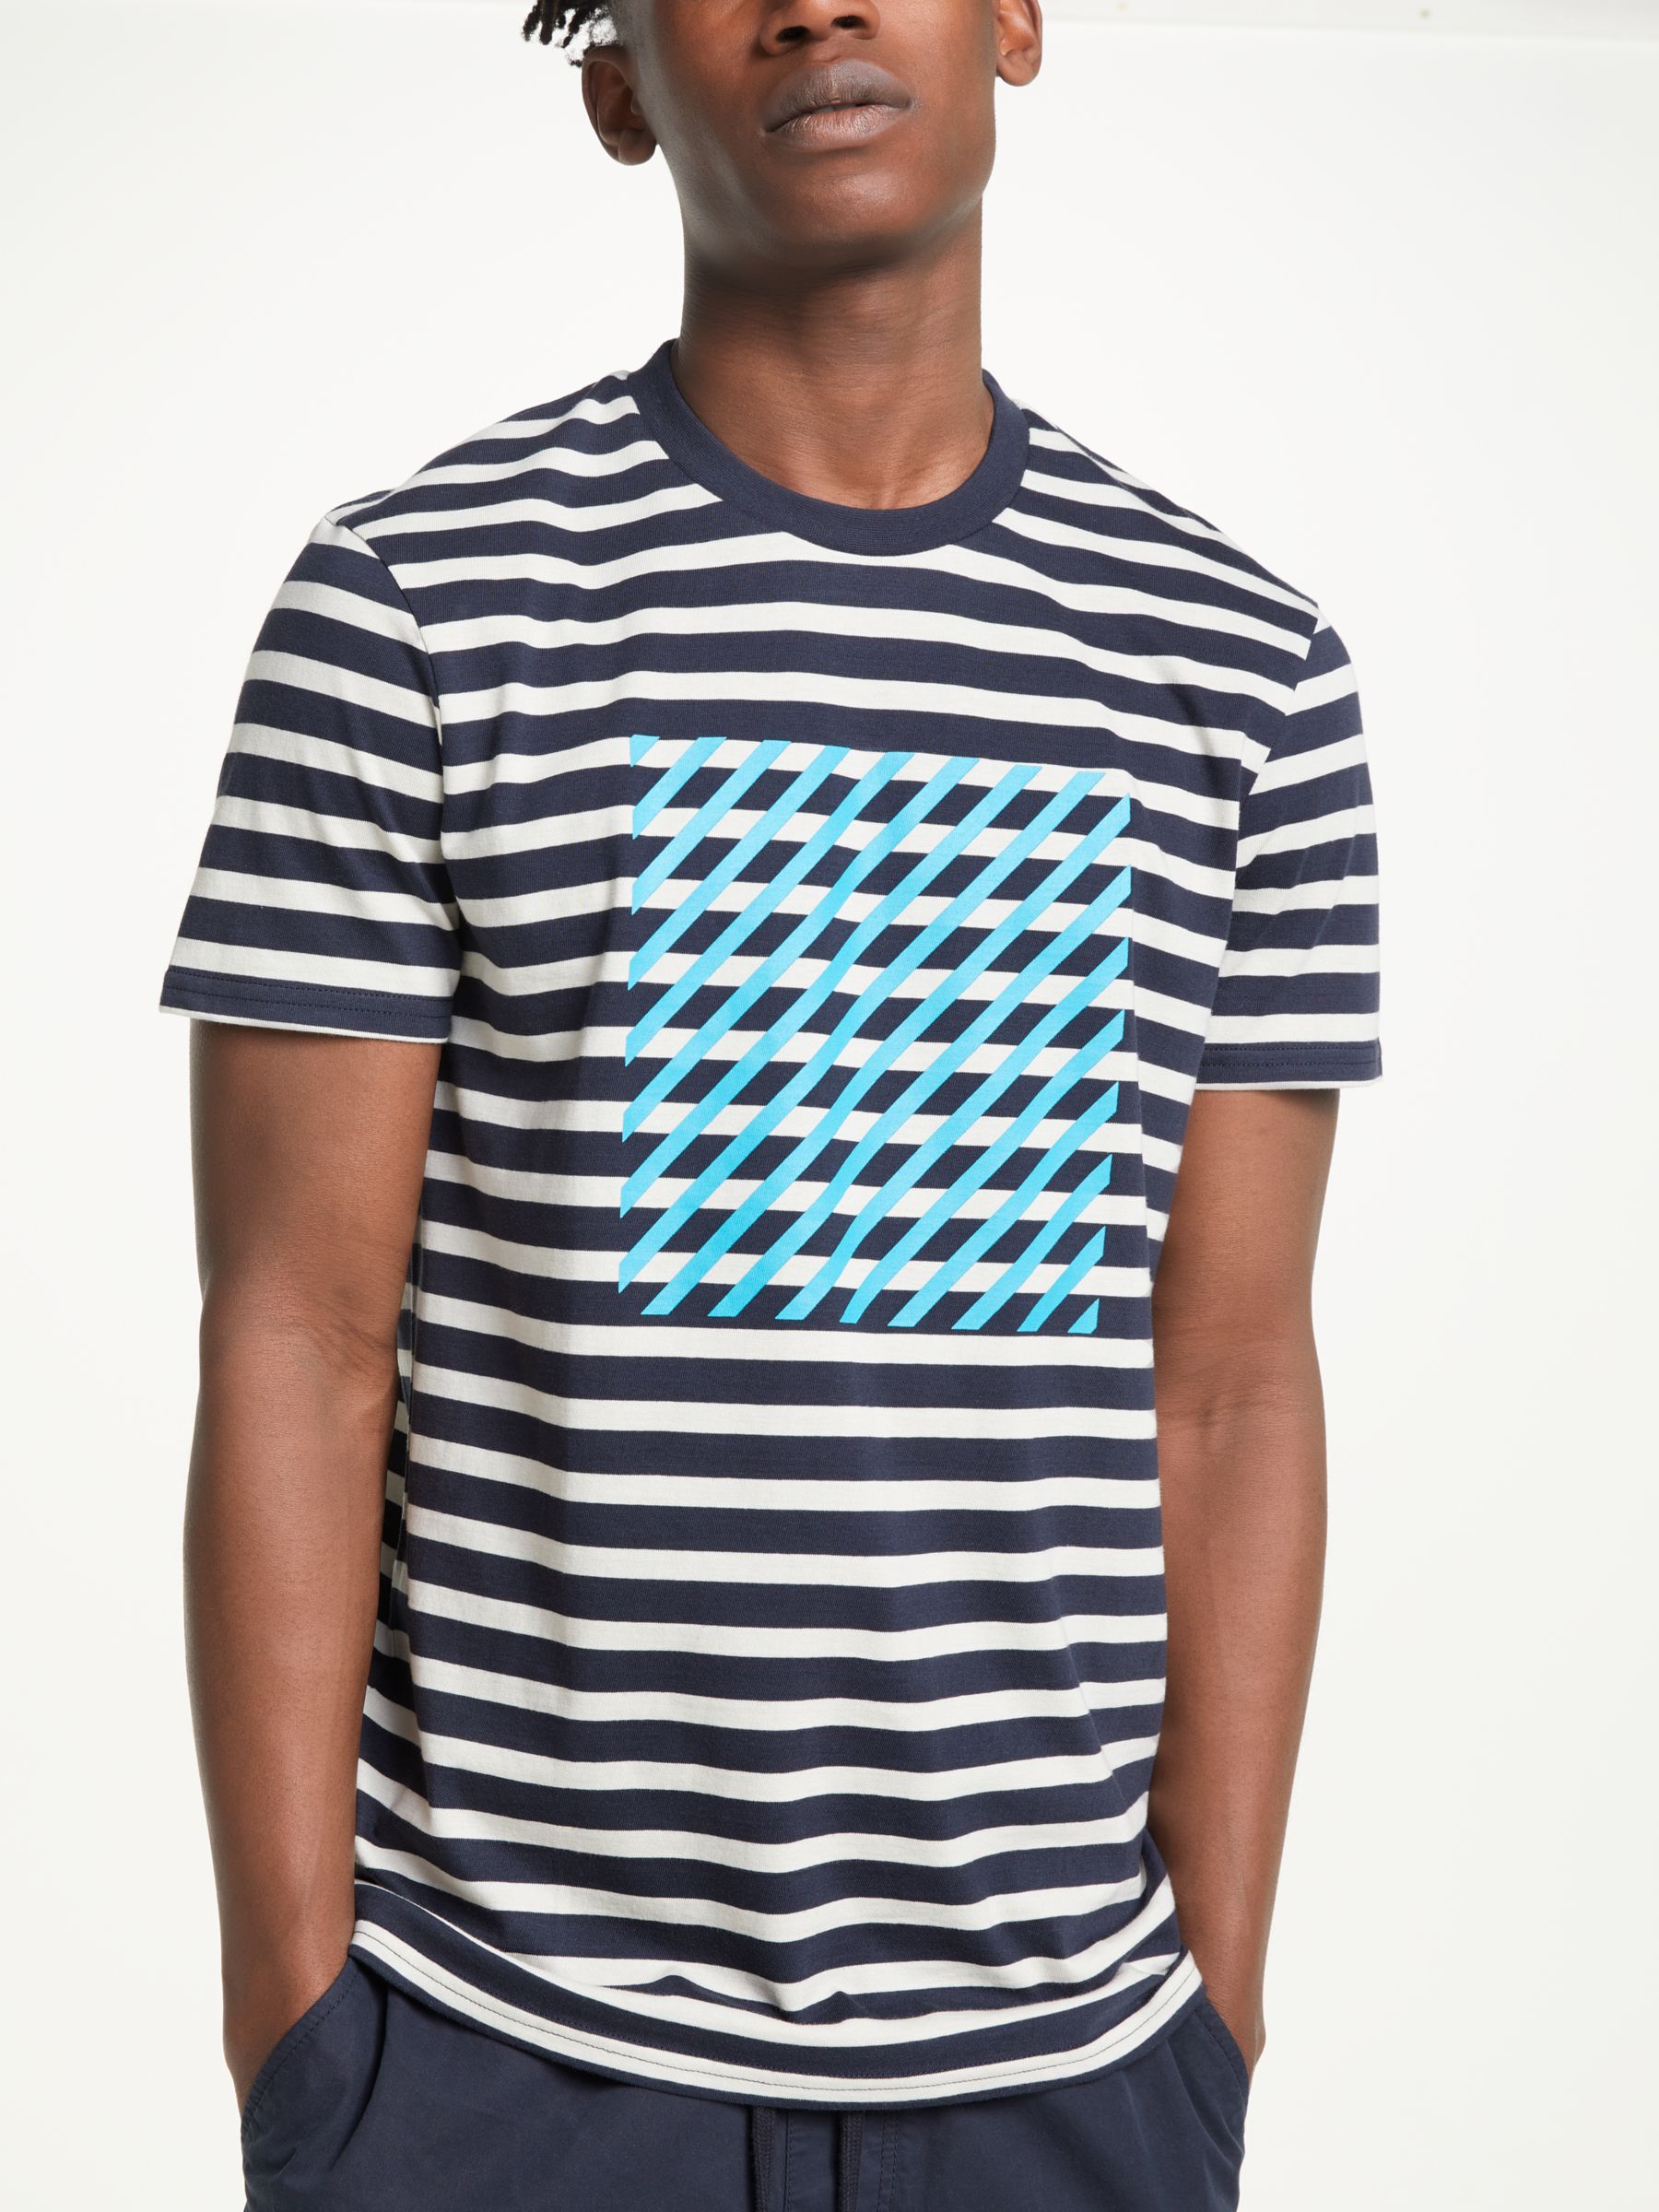 Kin Diagonal Graphic Stripe T-Shirt, Navy